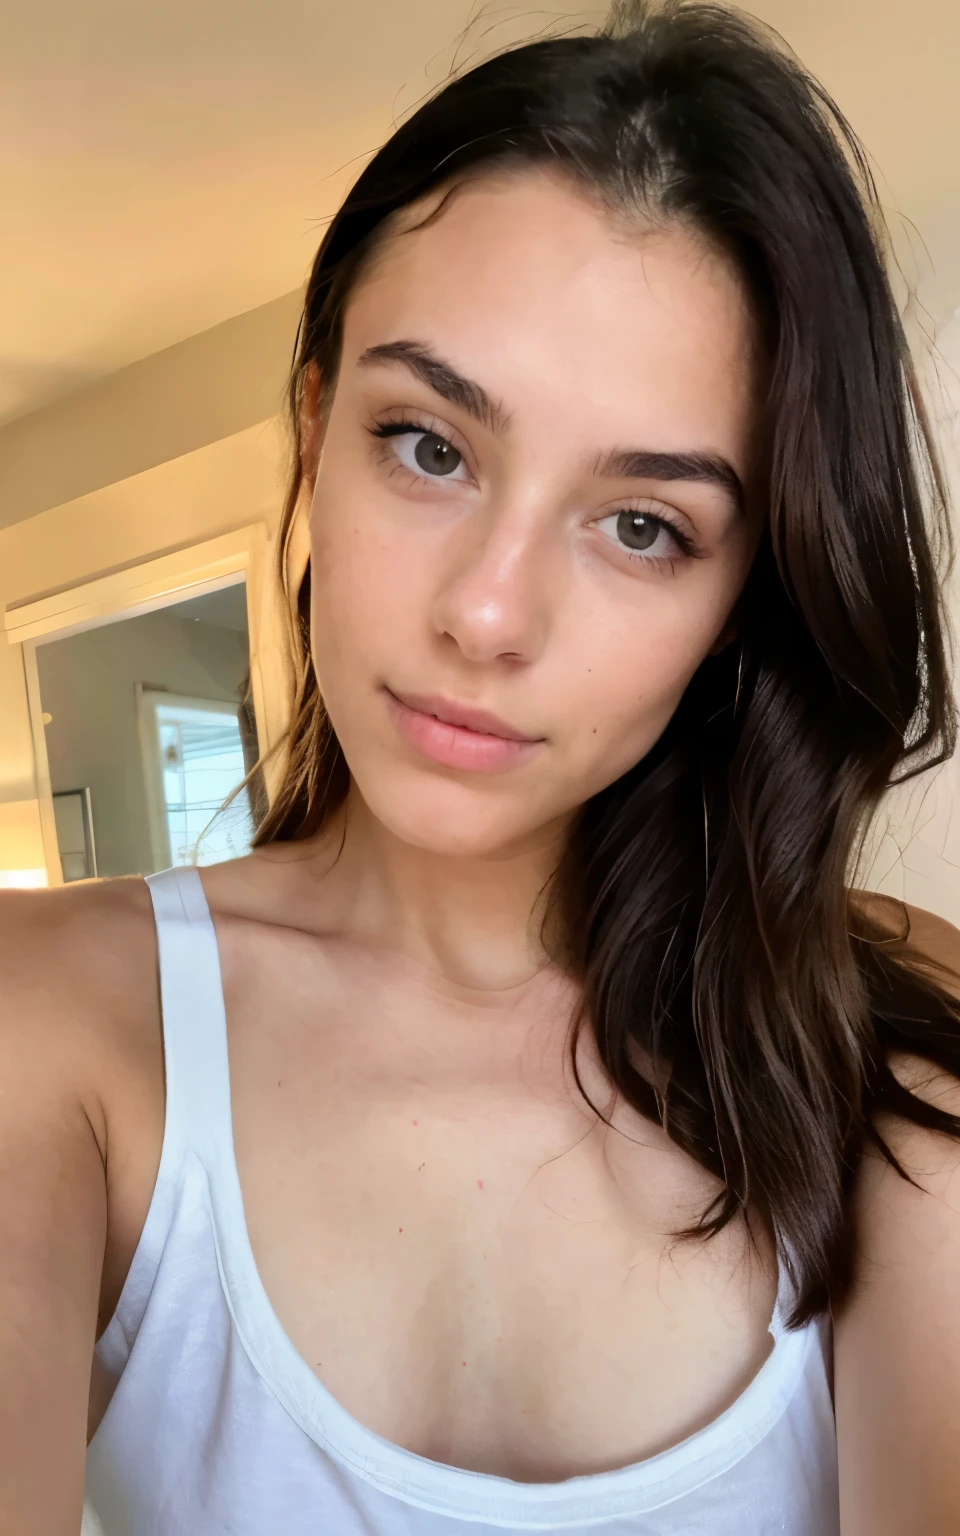 brunette 29 year old woman wearing tank top selfie - SeaArt AI